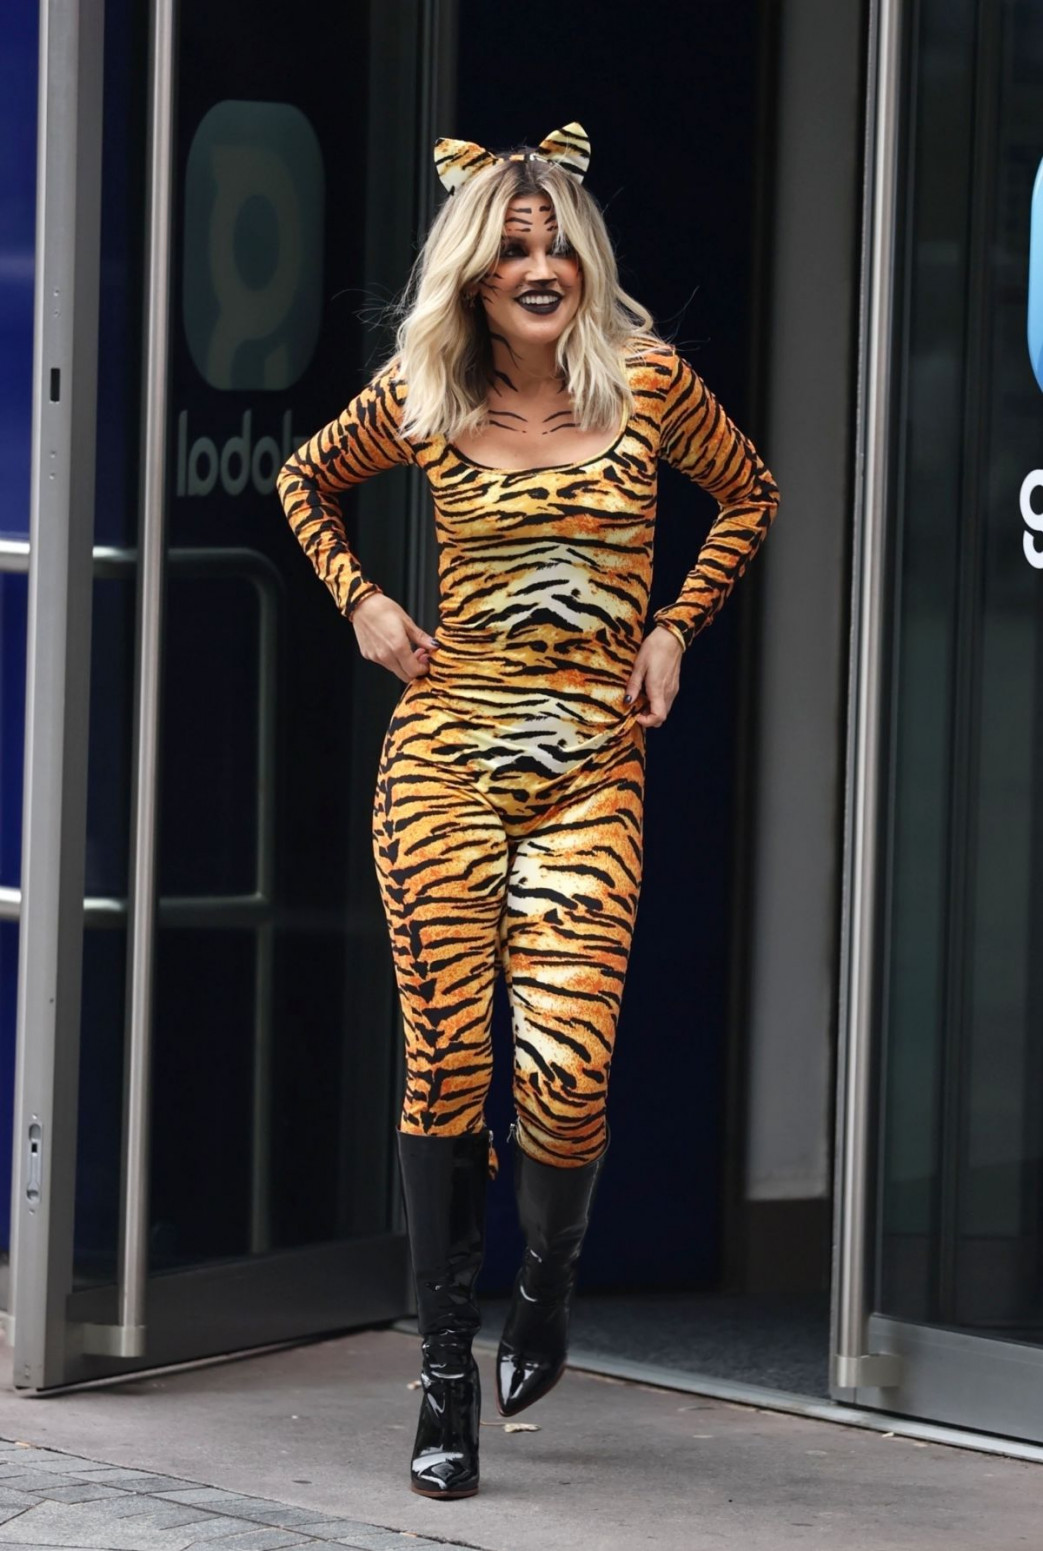 Ashley-Roberts-Stunning-in-Tiger-Catsuit-9.jpg